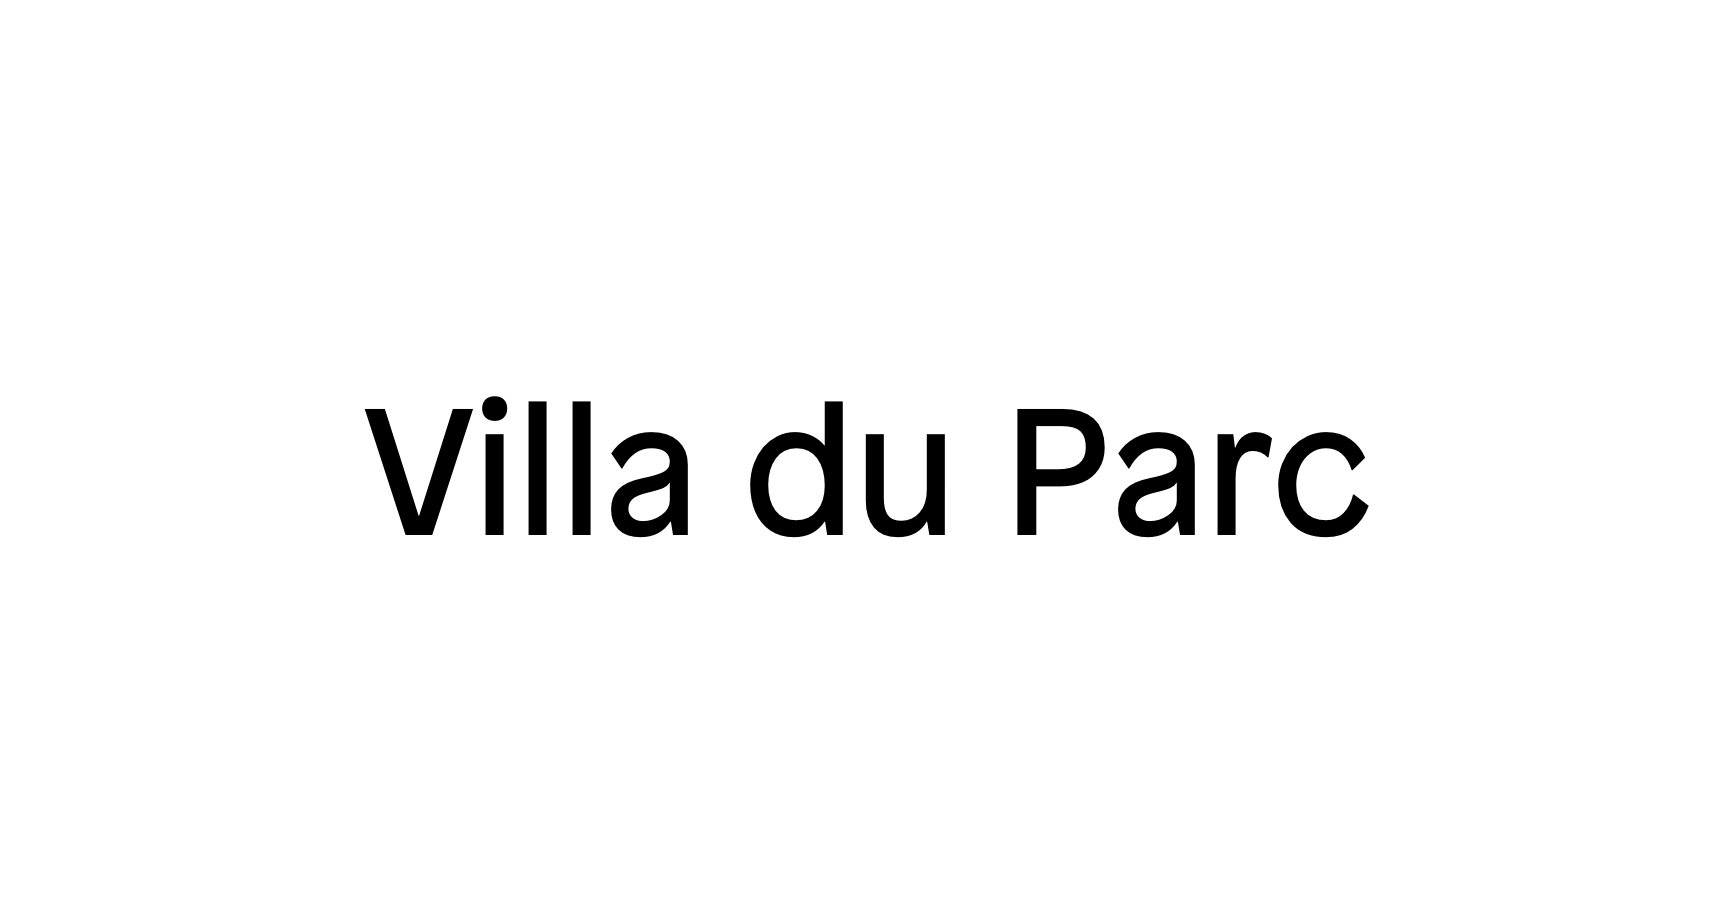 (c) Villaduparc.org